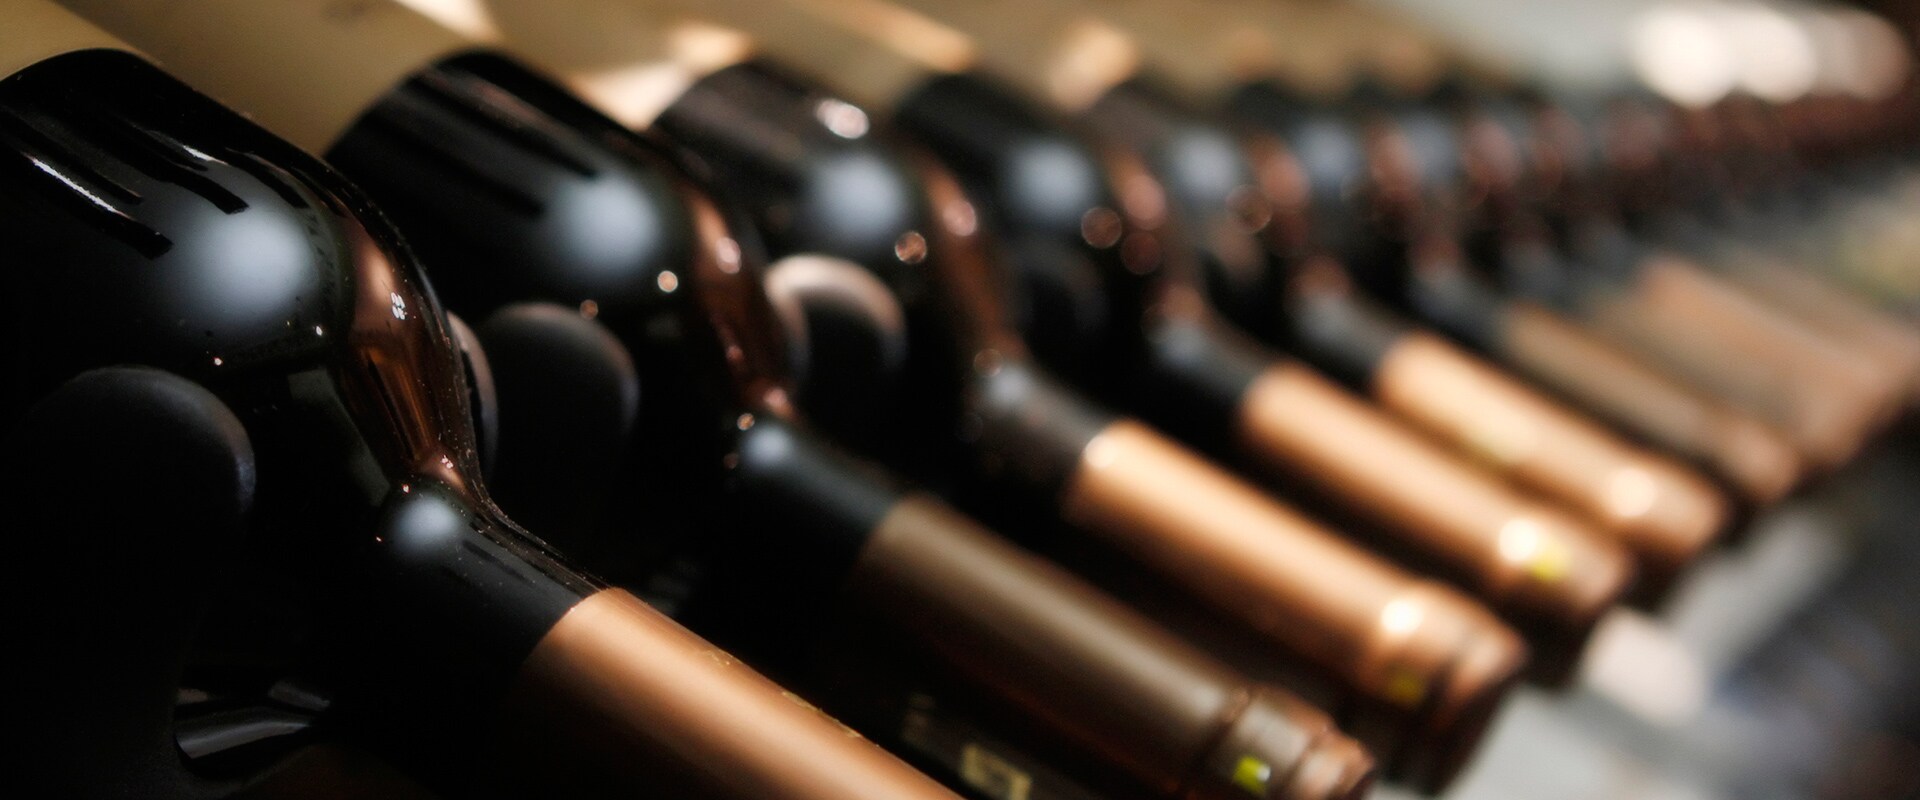 Row of wine bottles lying down